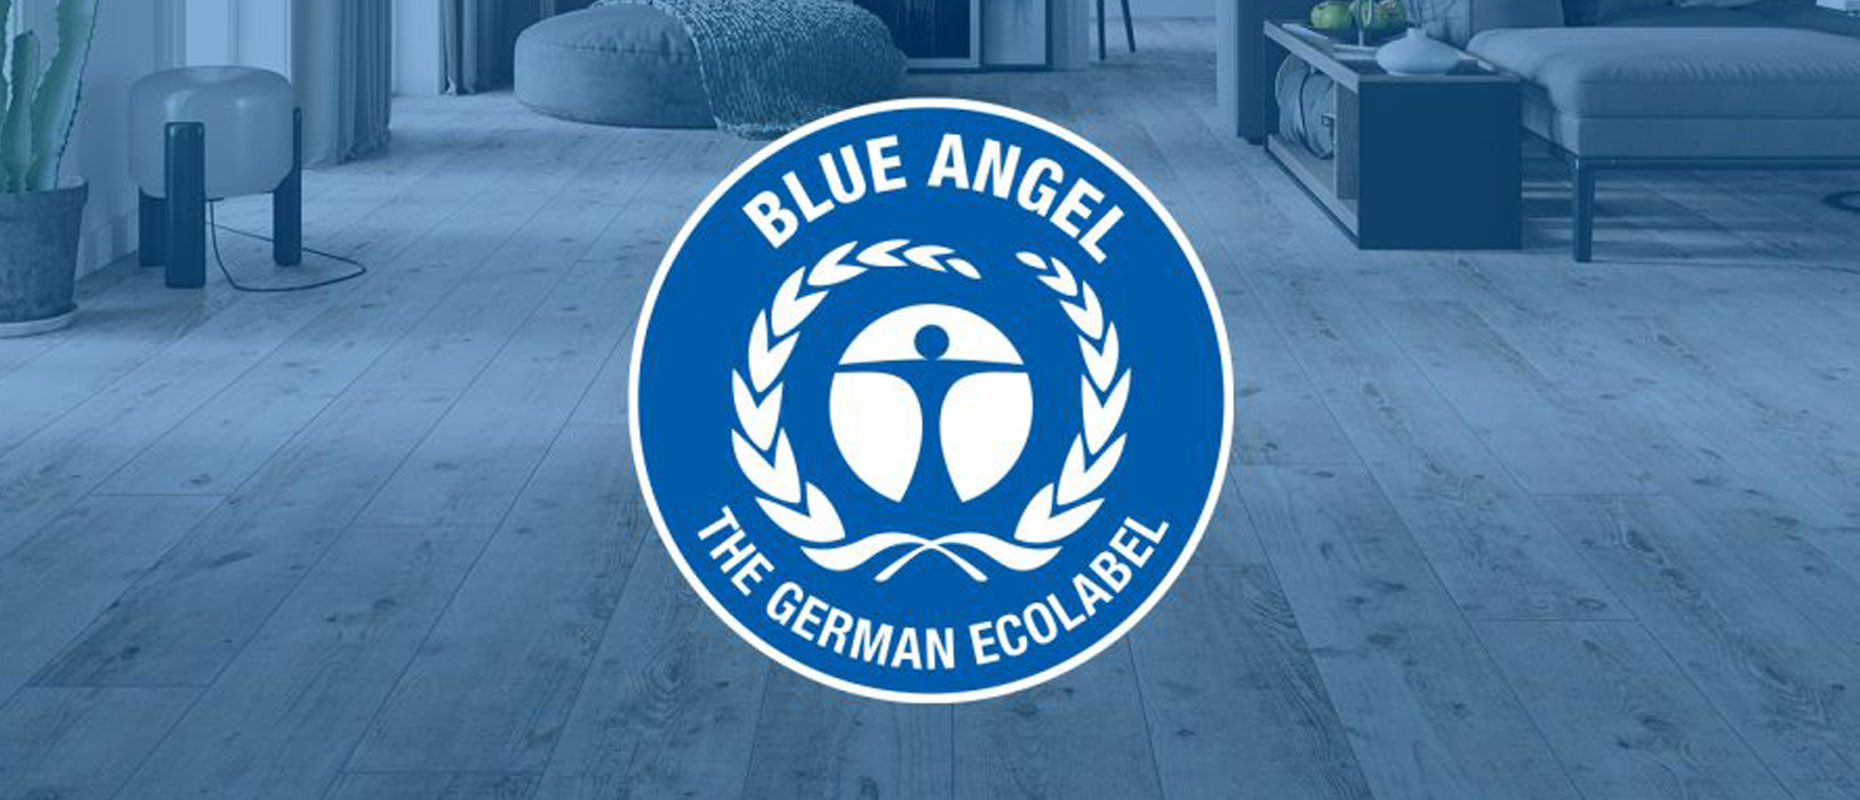 Blue_angel_banner2